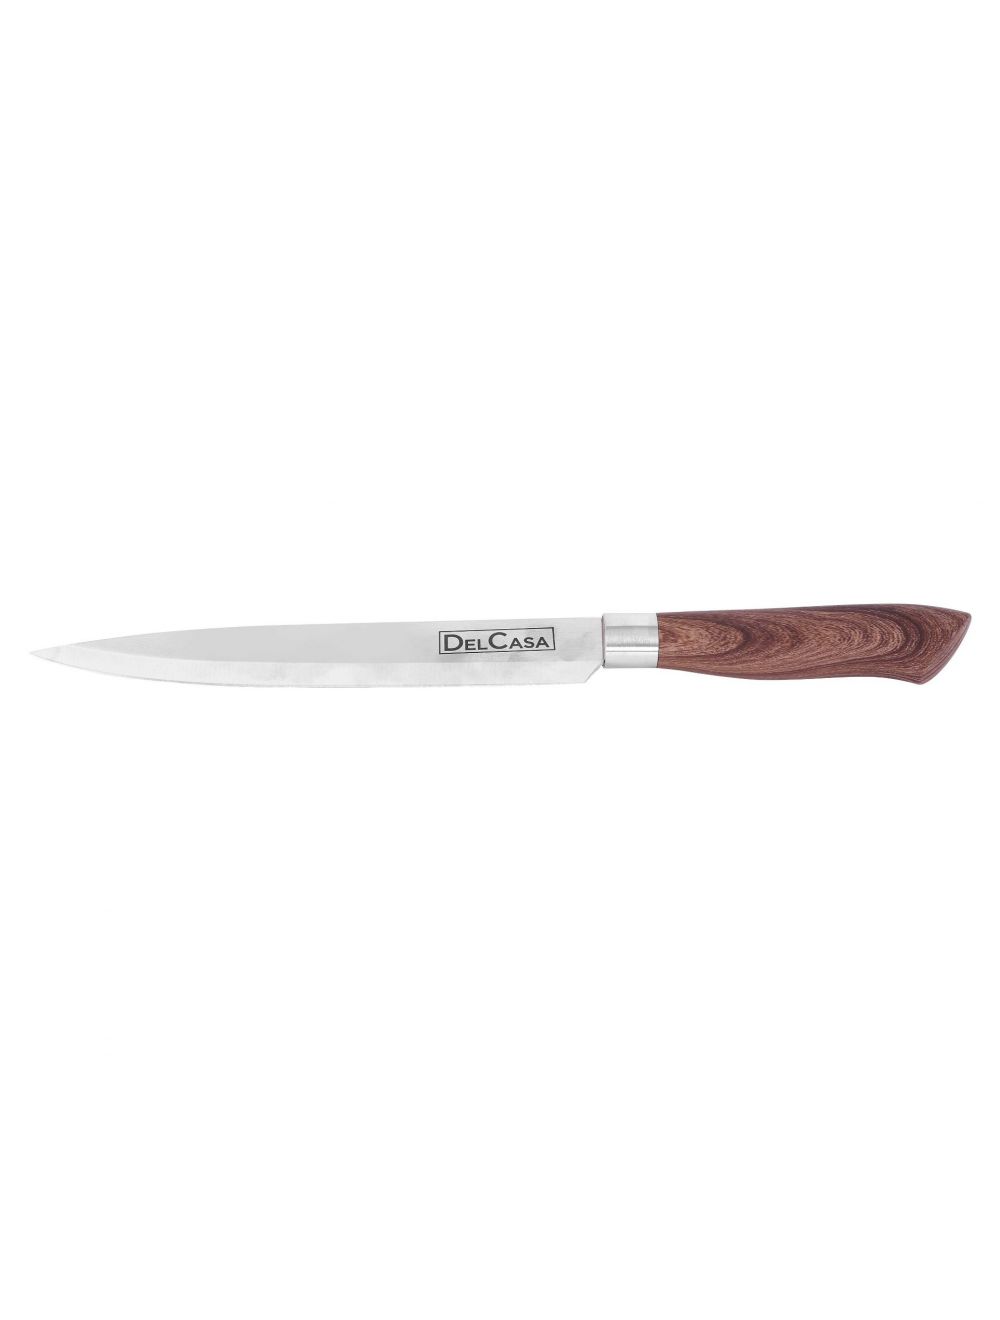 Delcasa Slicer Knife 8